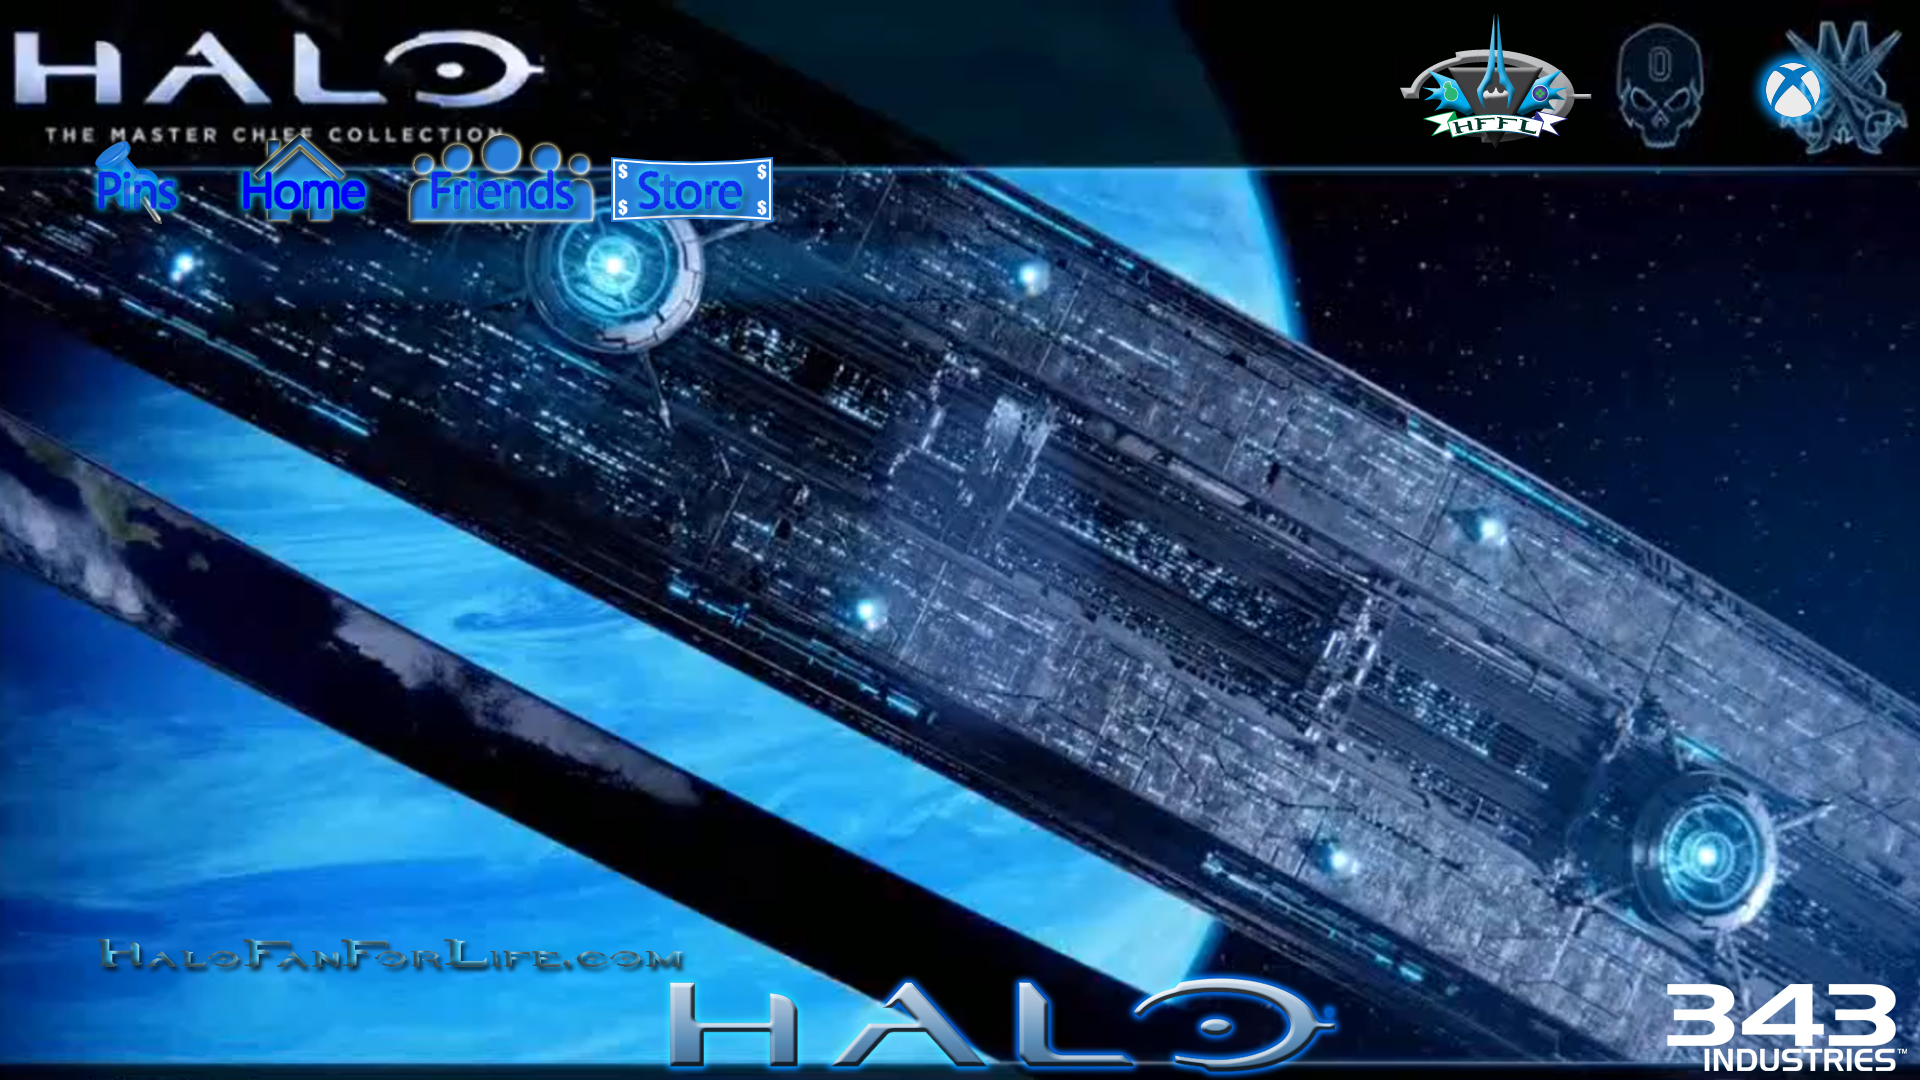 New Hffl Halo Xbox One Background To